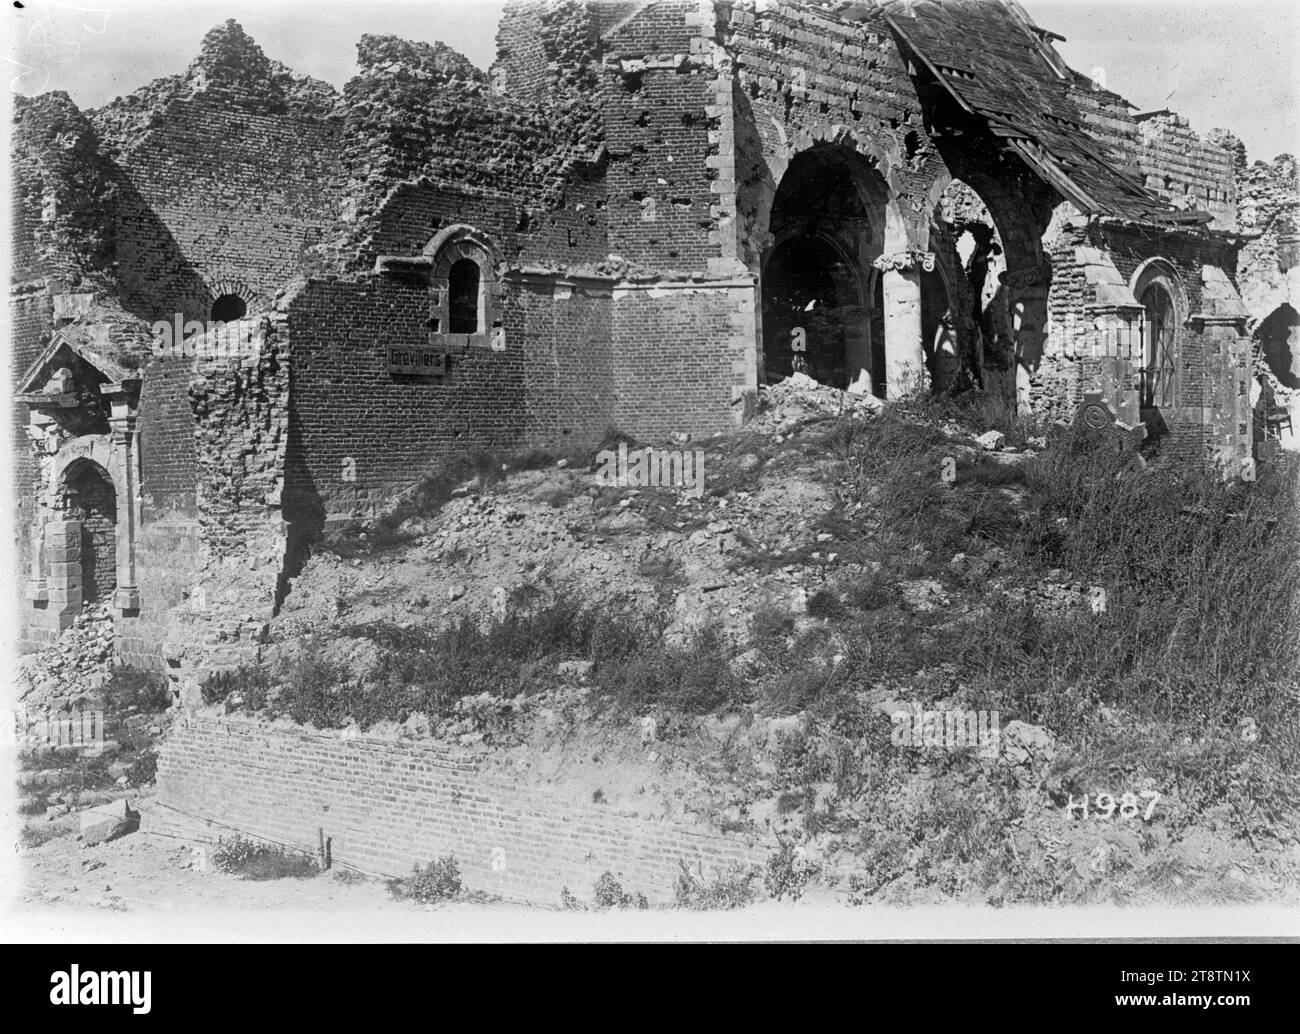 Grevillers Church damaged during World War I, Shows the extensive damage to Grevillers Church in France during World War I. Photograph taken between 2 and 4 September 1918 Stock Photo